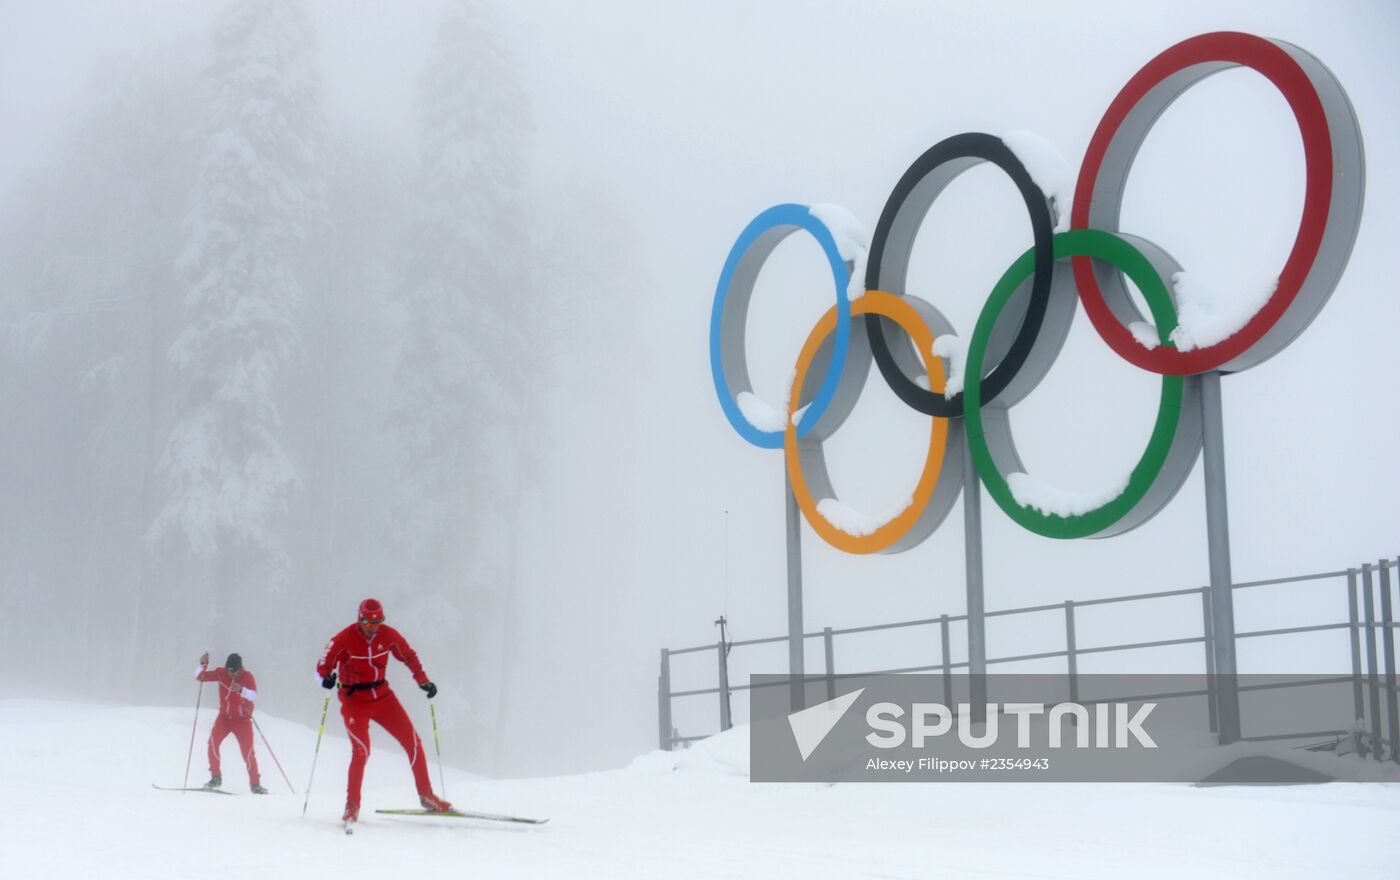 2014 Winter Olympics. Cross-country skiing. Training